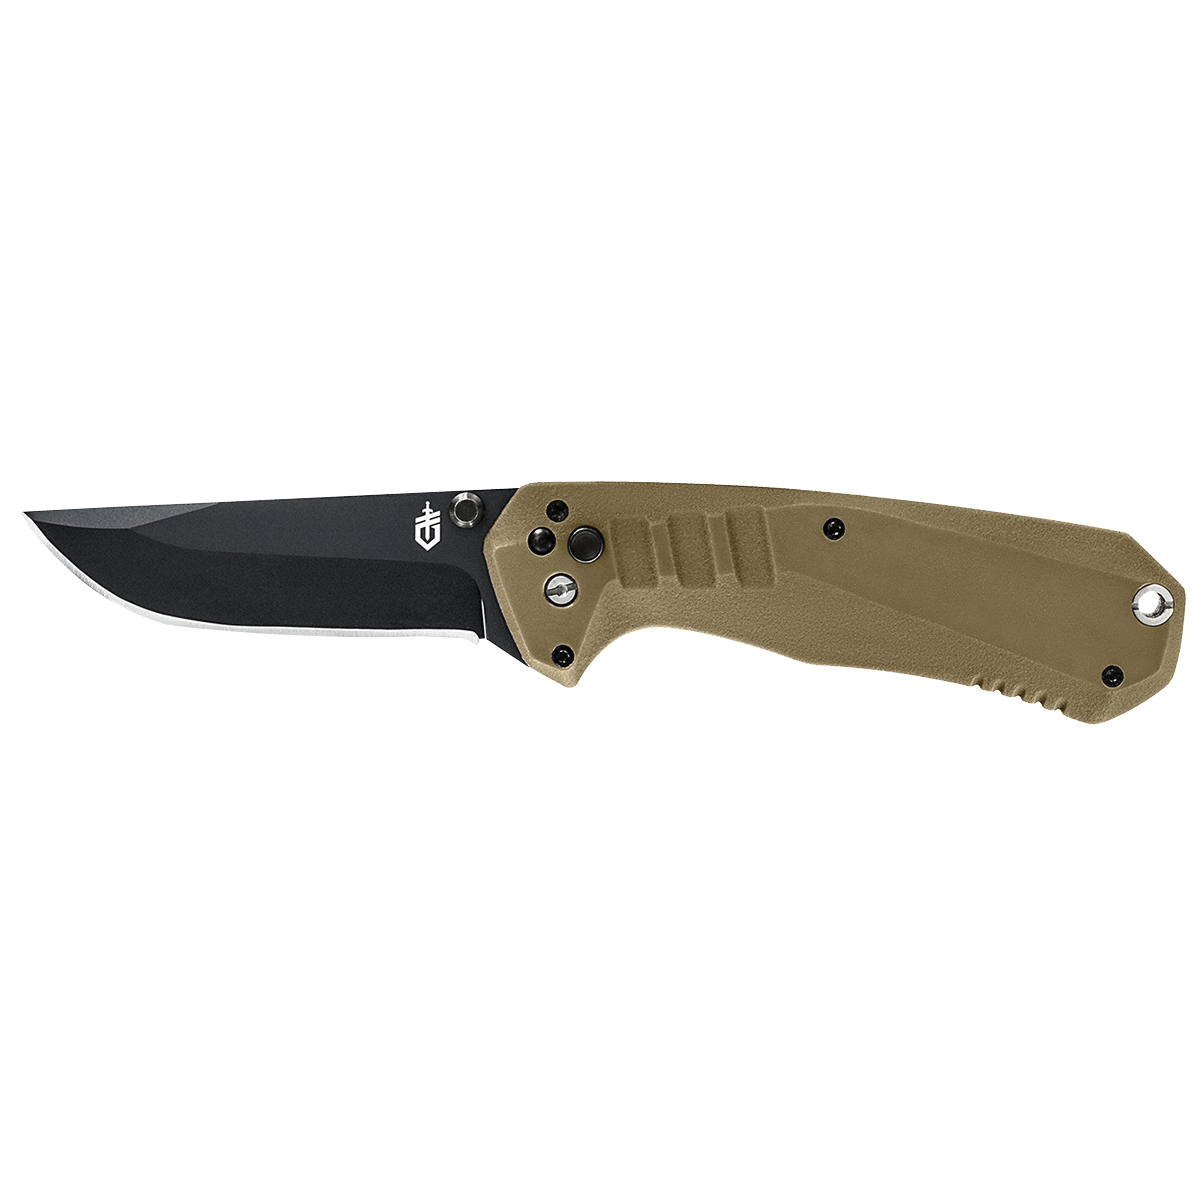 31-003571 Haul Pocket Knife, 3.1 in L Blade, Stainless Steel Blade, Coyote Brown Handle